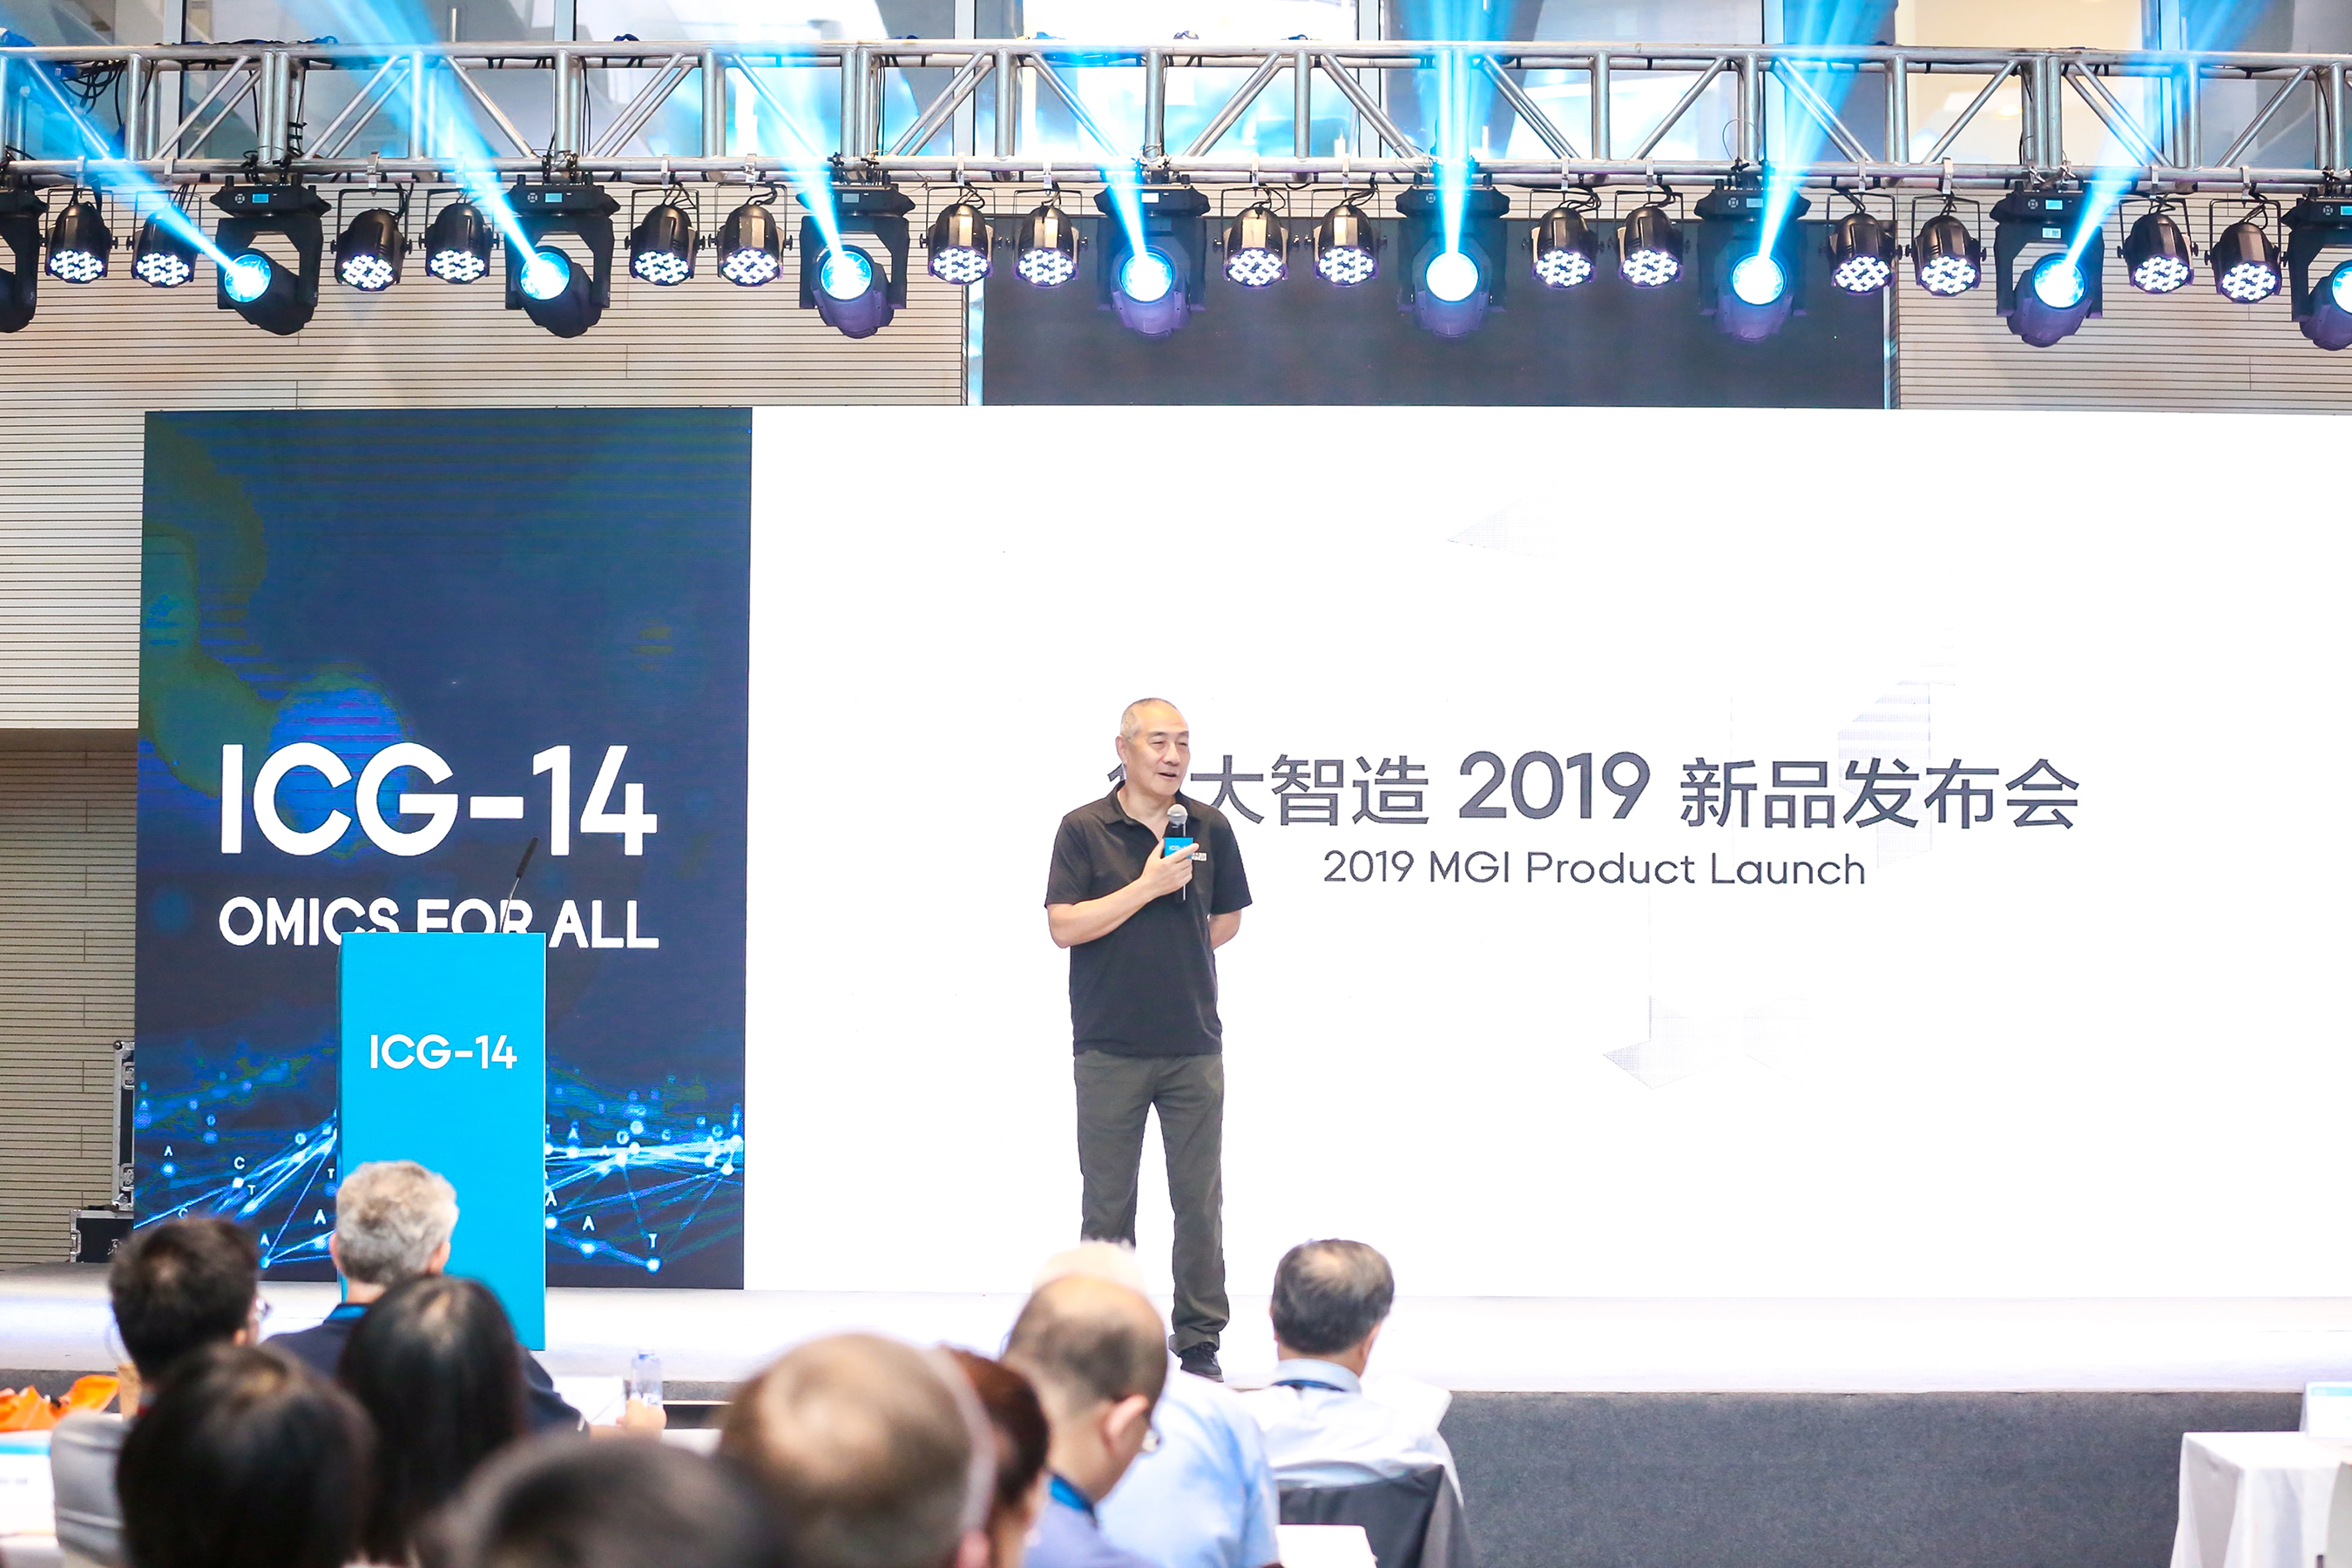 BGI Group Co-founder and Chairman Wang Jian kicks off MGI 2019 Product Launch